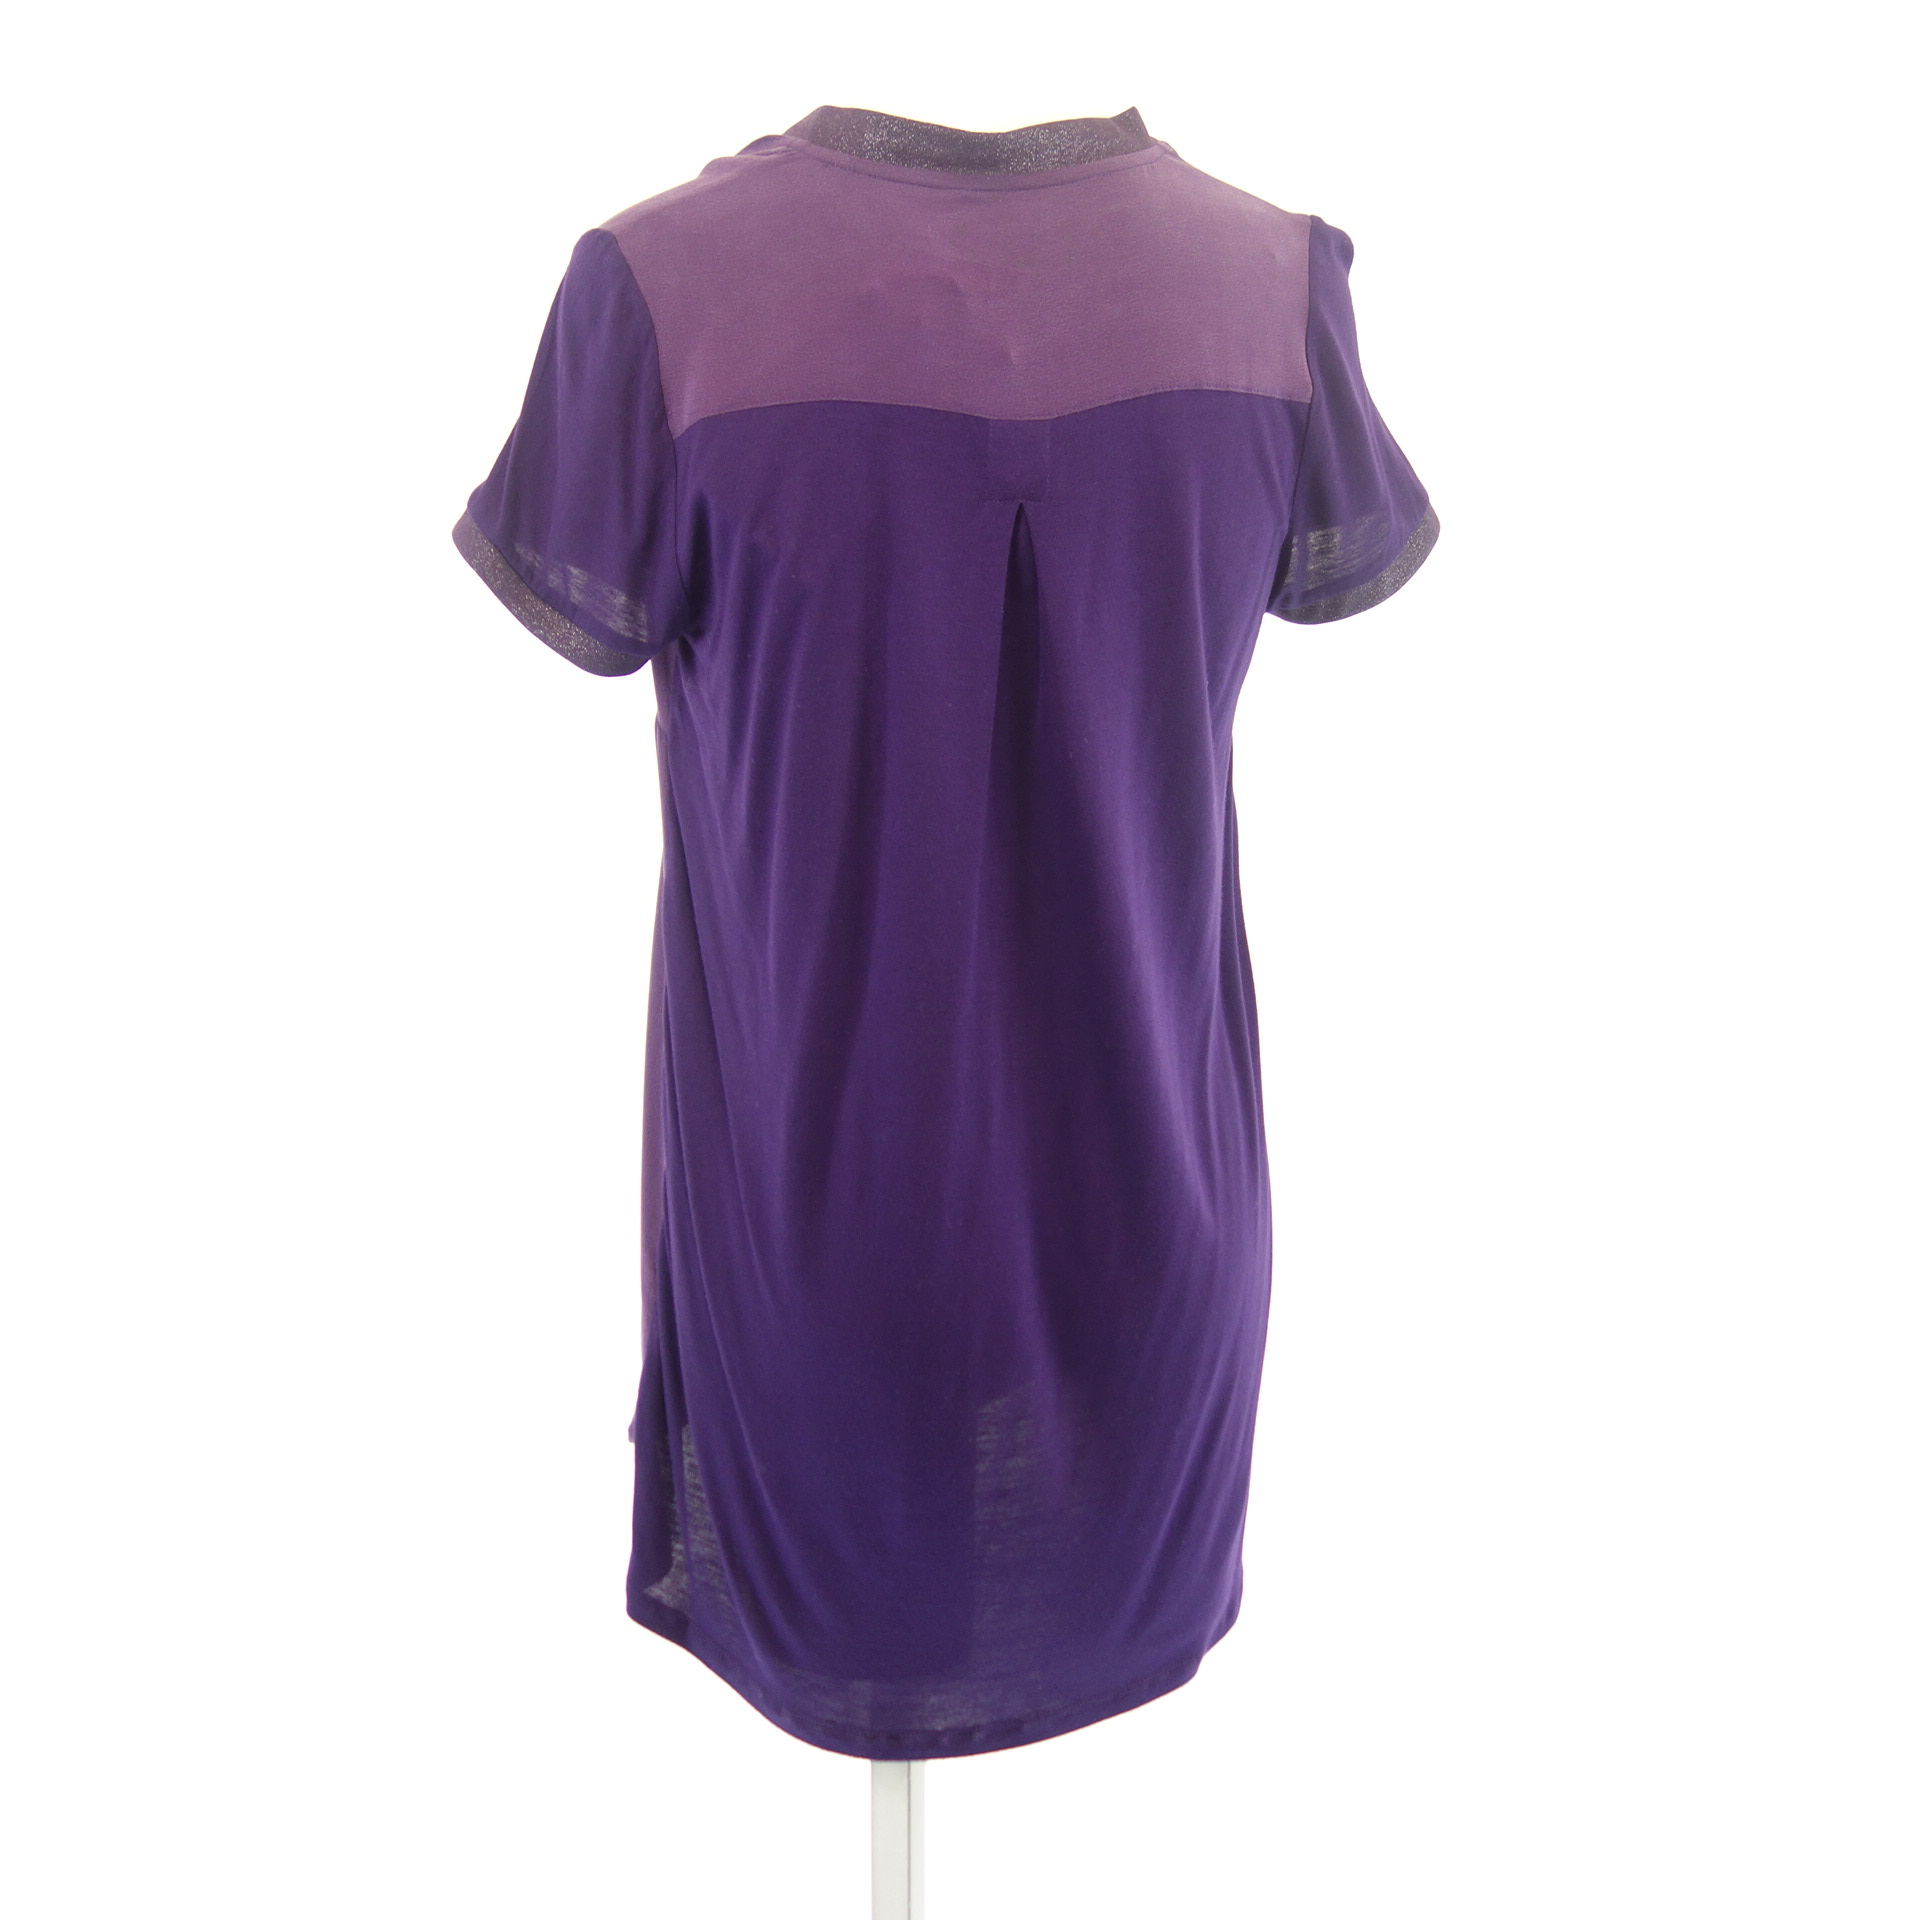 FROGBOX by Princess Langes Damen Shirt T-Shirt Tunika Seide Viskose Lila Violett Größe 36